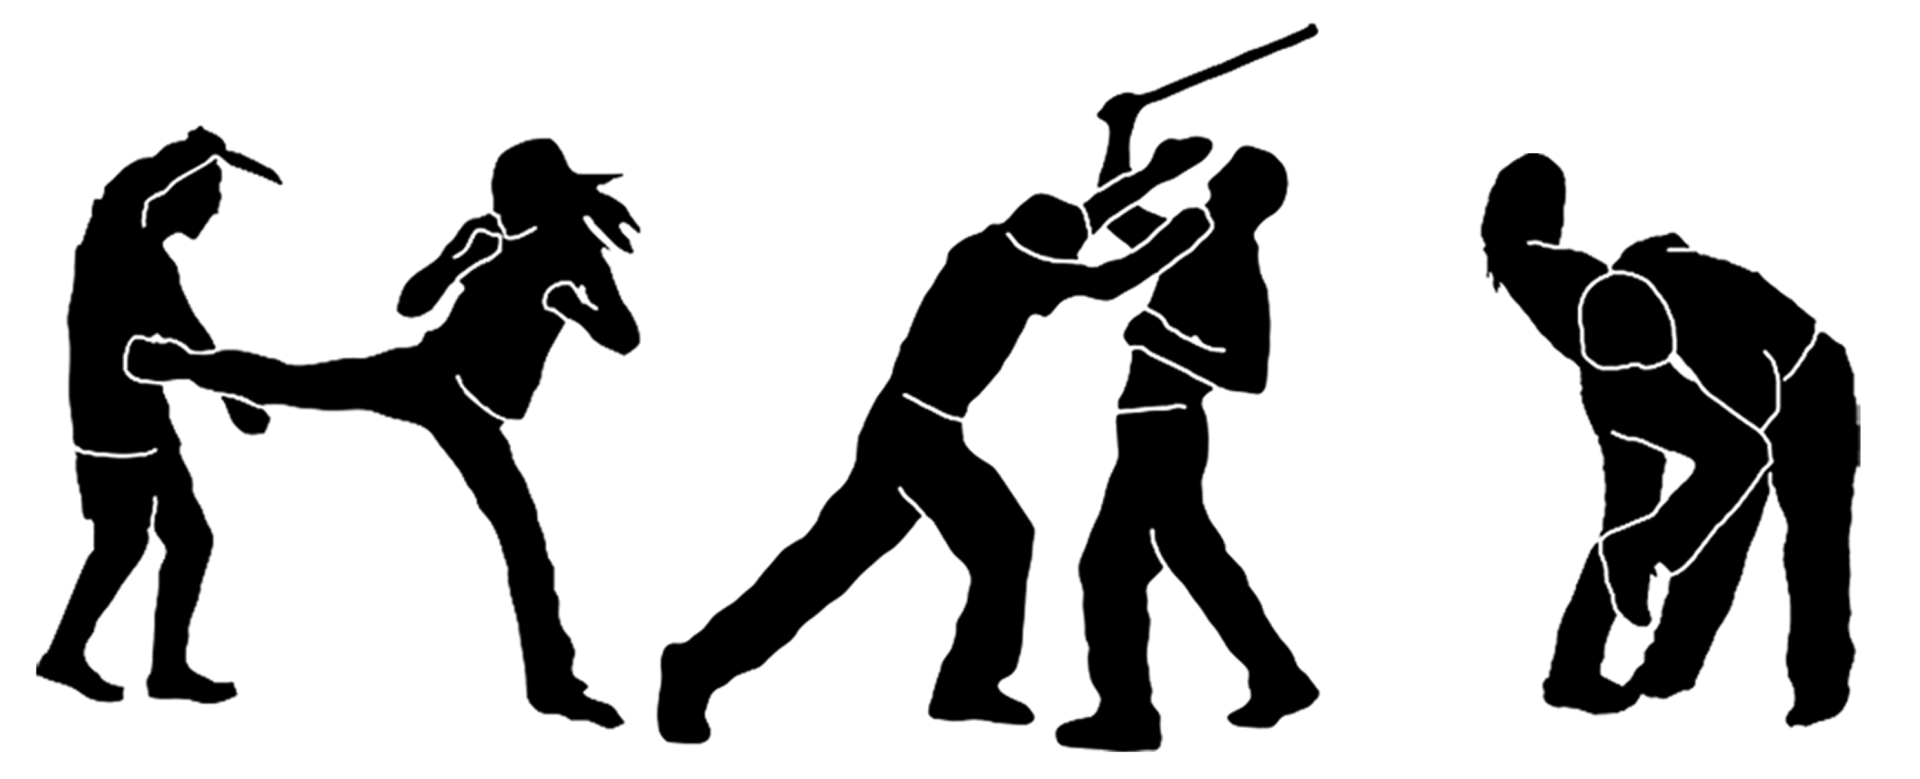 Karate clipart self defense, Karate self defense Transparent